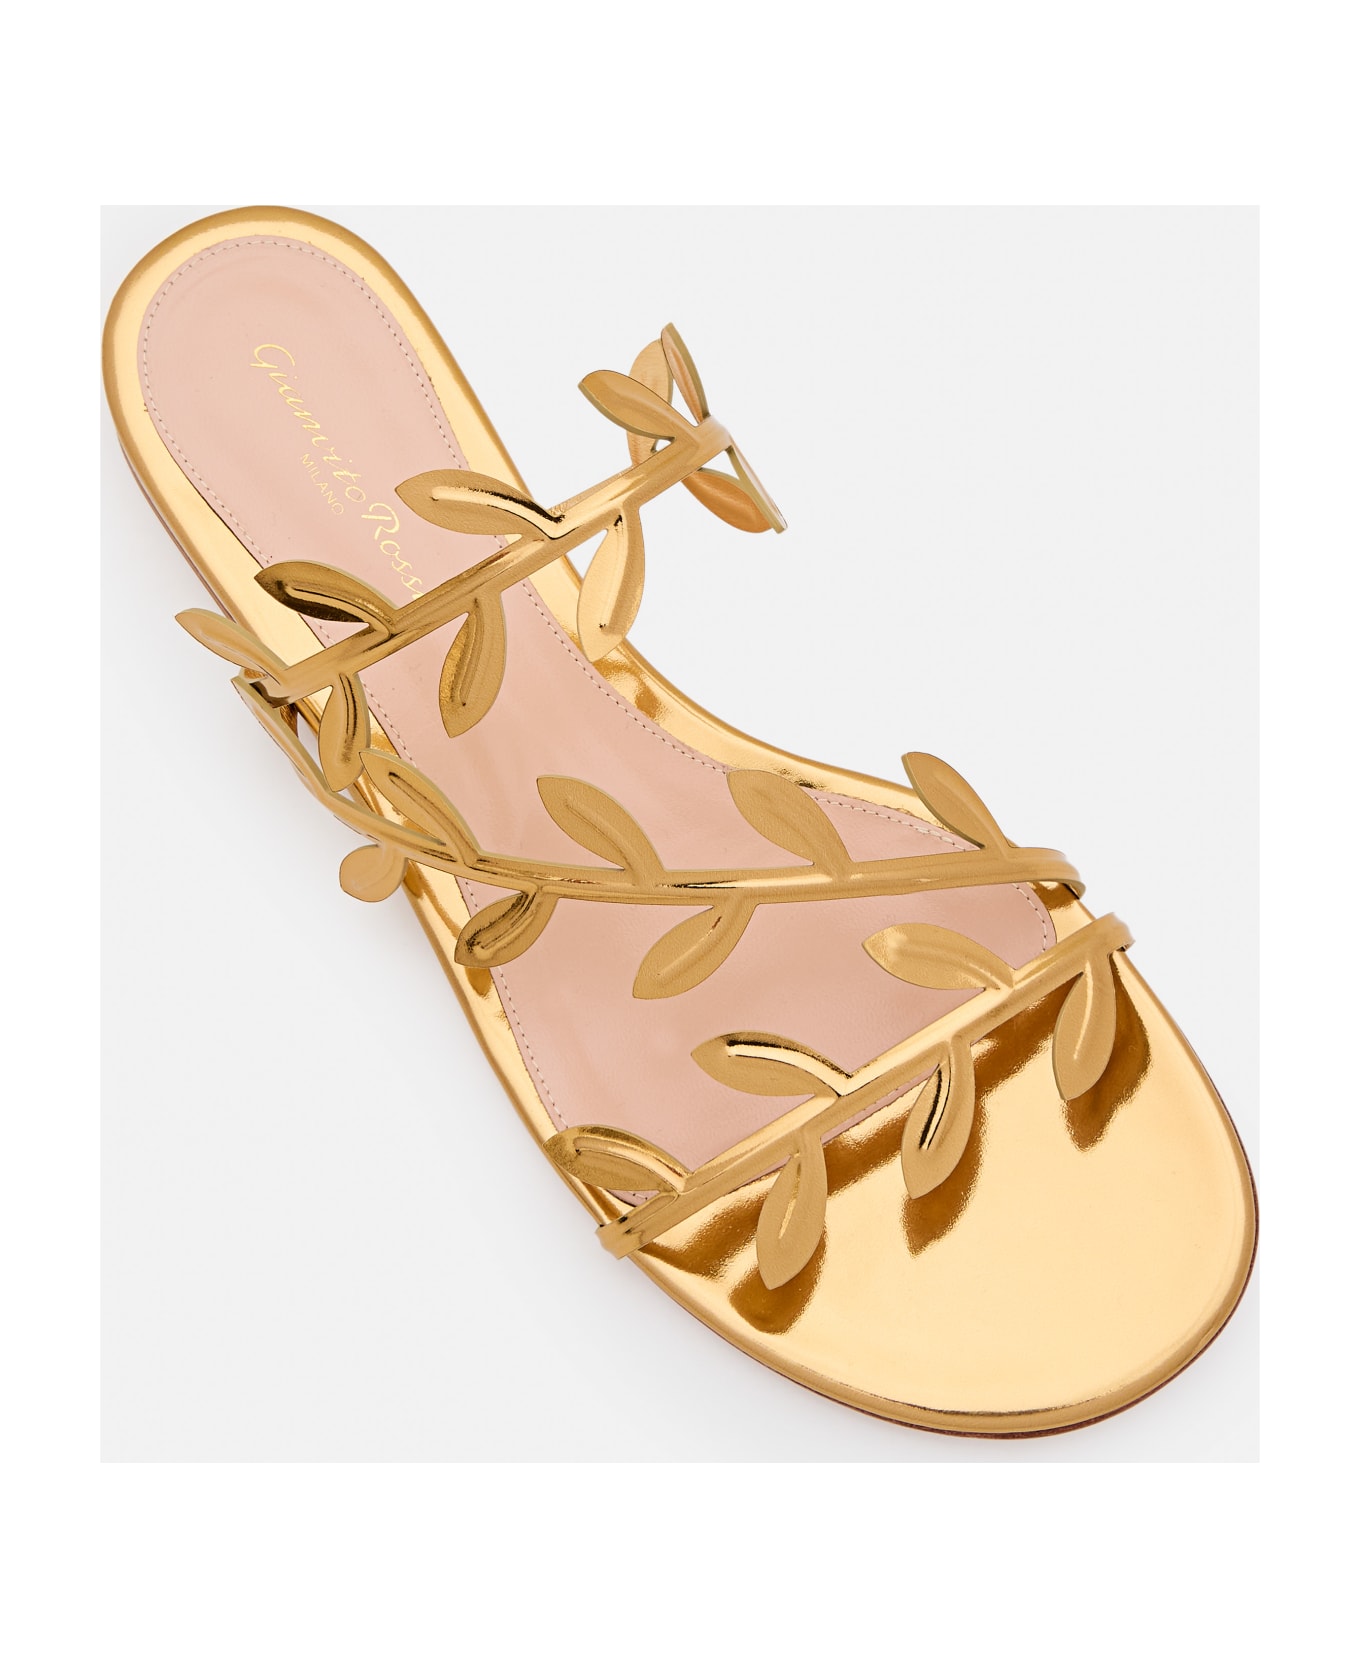 Gianvito Rossi Flat Sandals - Golden サンダル